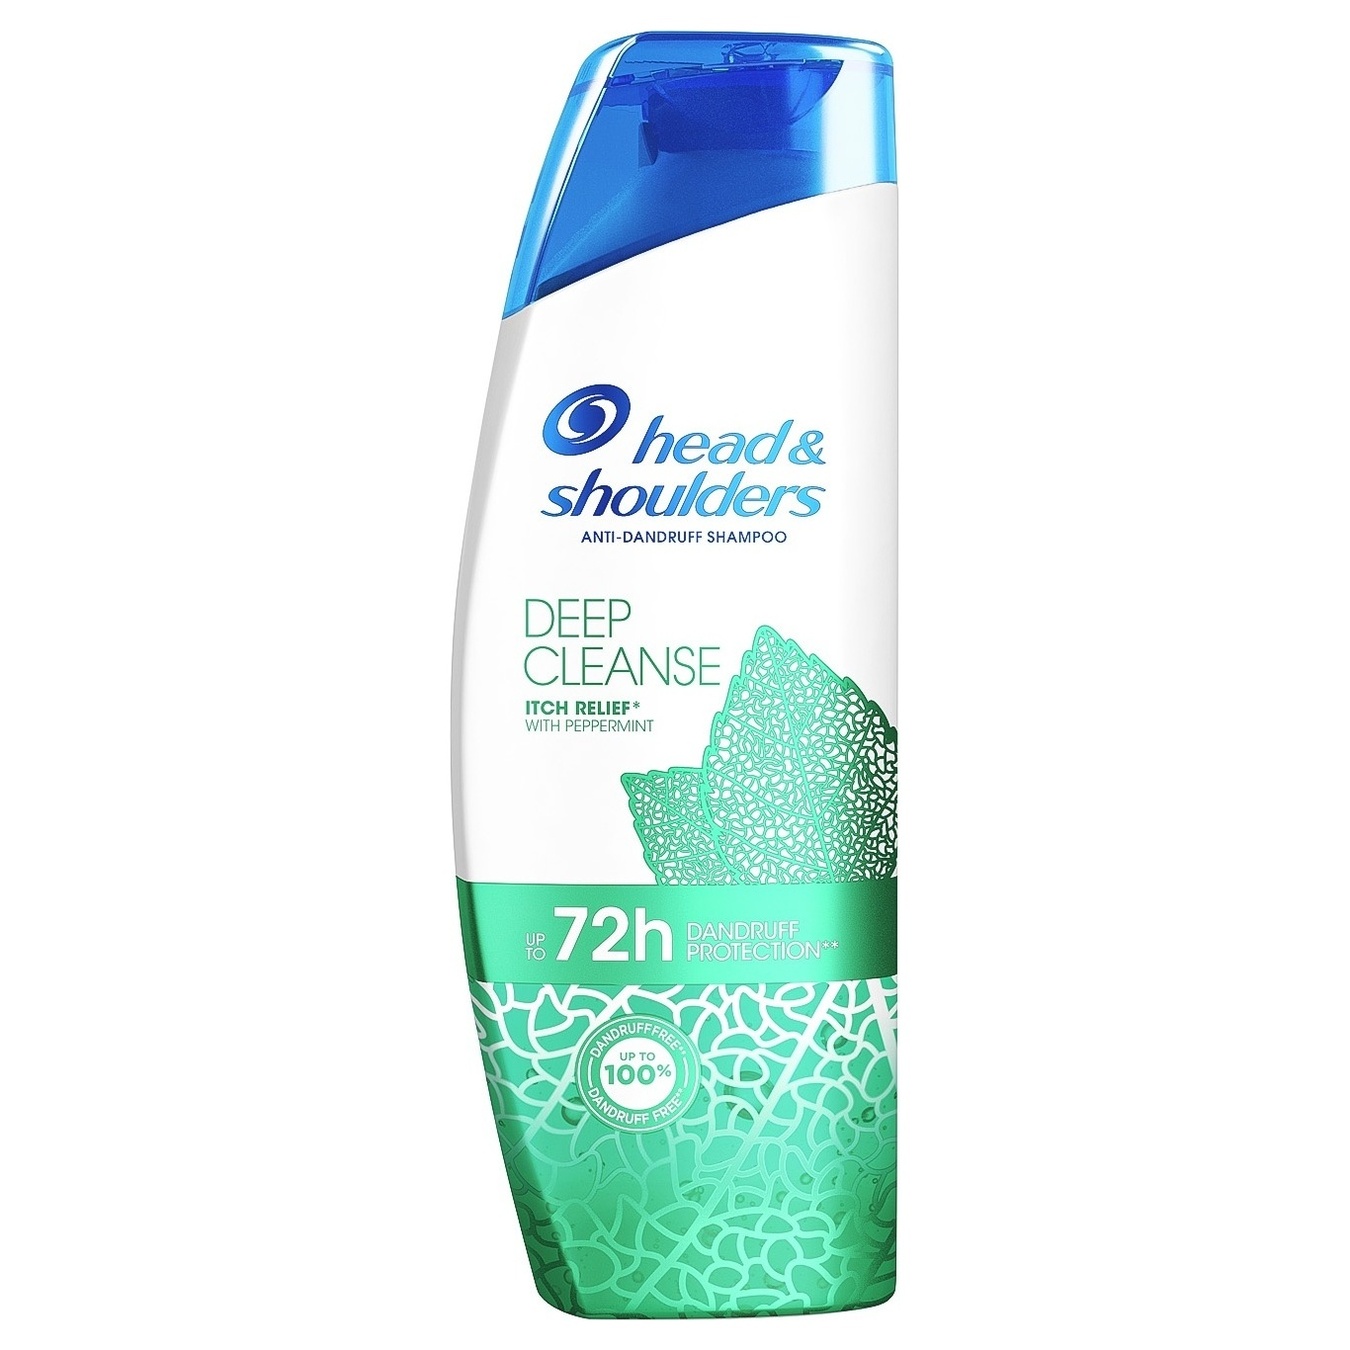 Head & Shoulders anti-dandruff itch relief shampoo 300ml